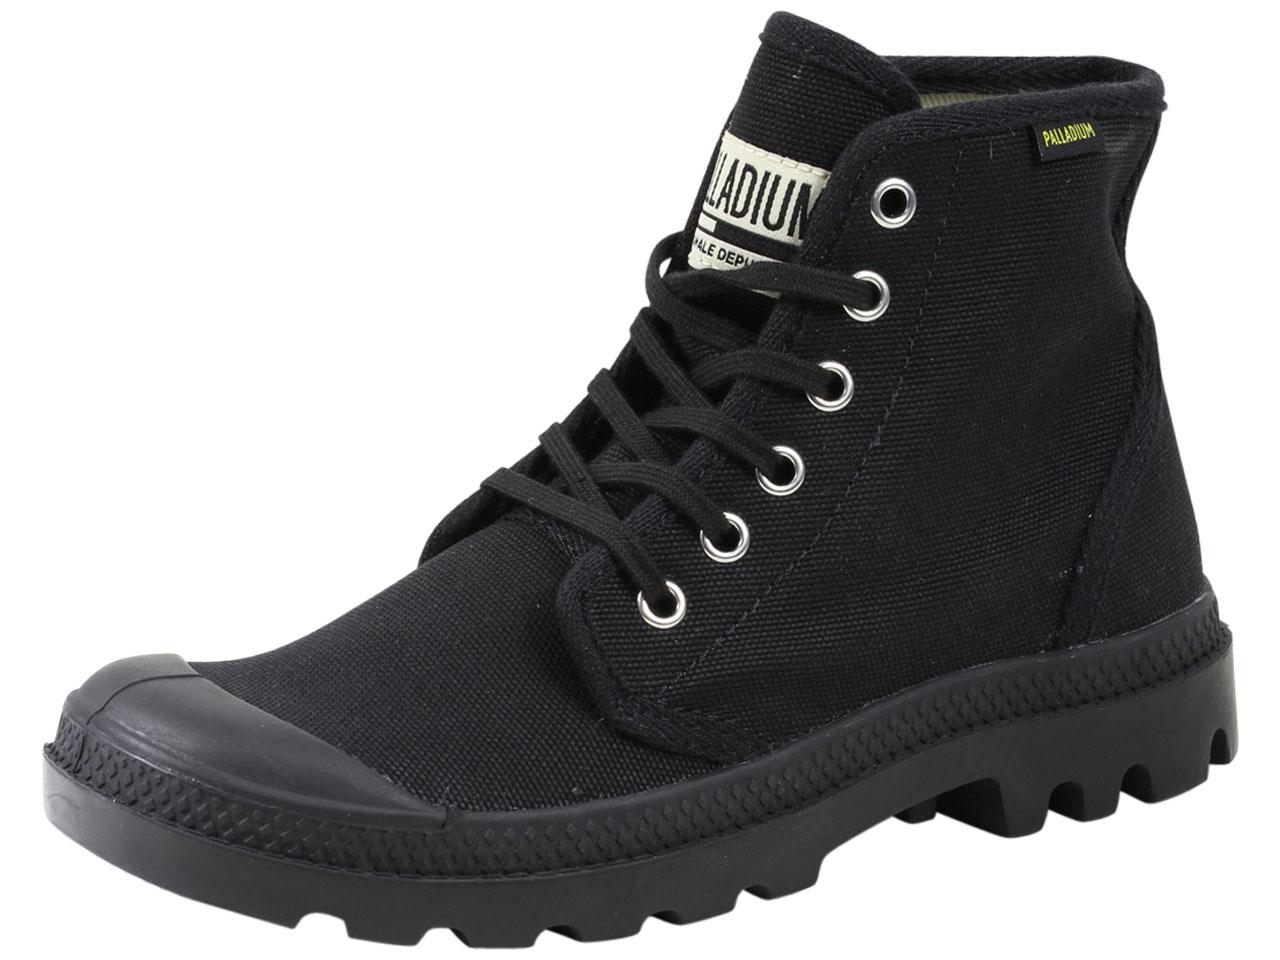 Palladium Men's Pampa Hi Originale Chukka Boots Shoes - Black - 8.5 D(M) US/10 B(M) US